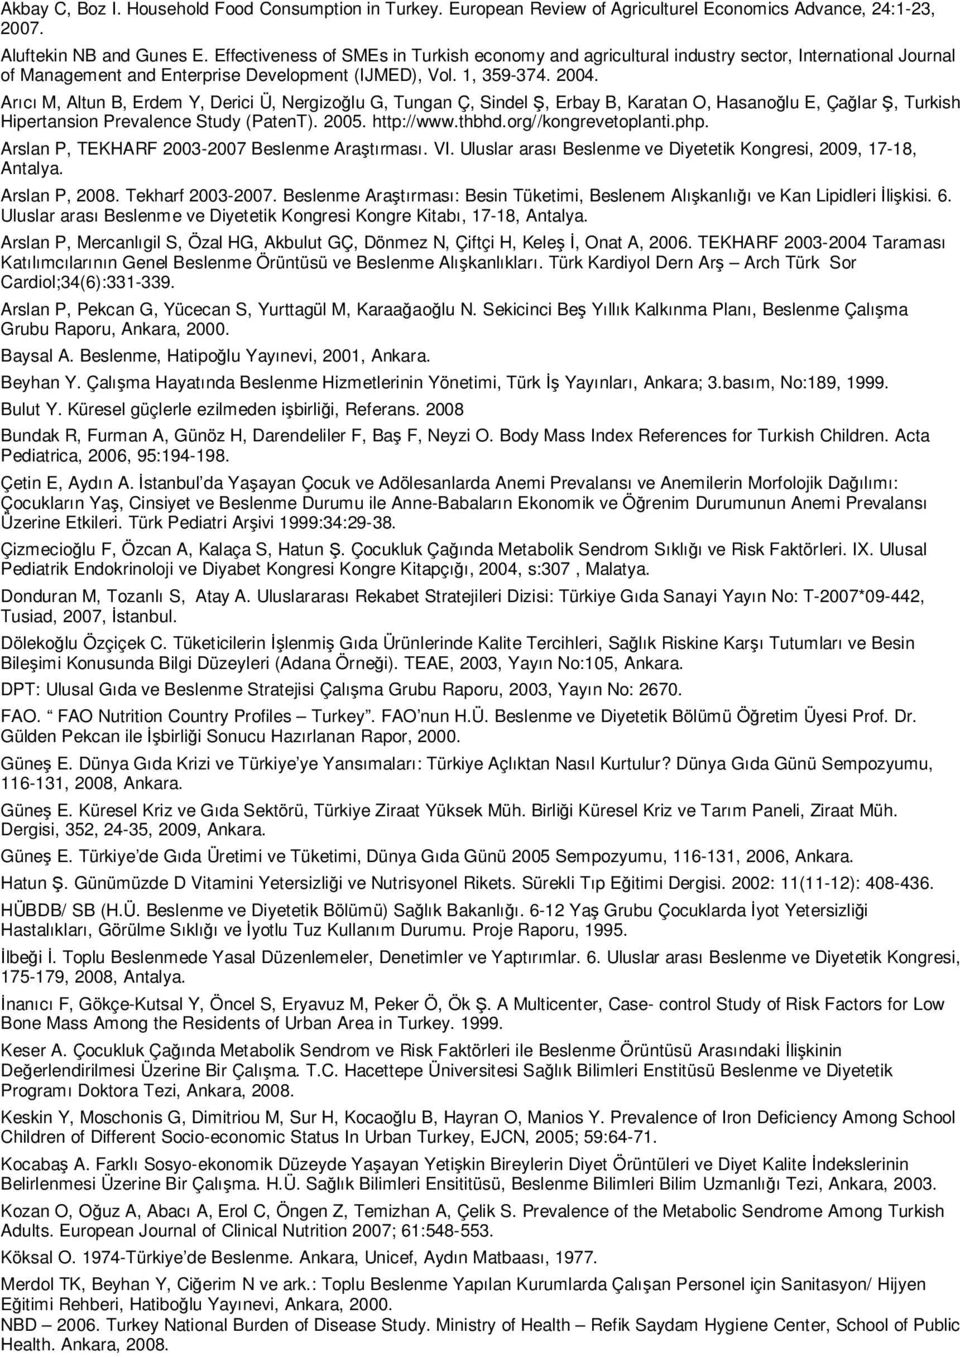 Arıcı M, Altun B, Erdem Y, Derici Ü, Nergizoğlu G, Tungan Ç, Sindel Ş, Erbay B, Karatan O, Hasanoğlu E, Çağlar Ş, Turkish Hipertansion Prevalence Study (PatenT). 2005. http://www.thbhd.